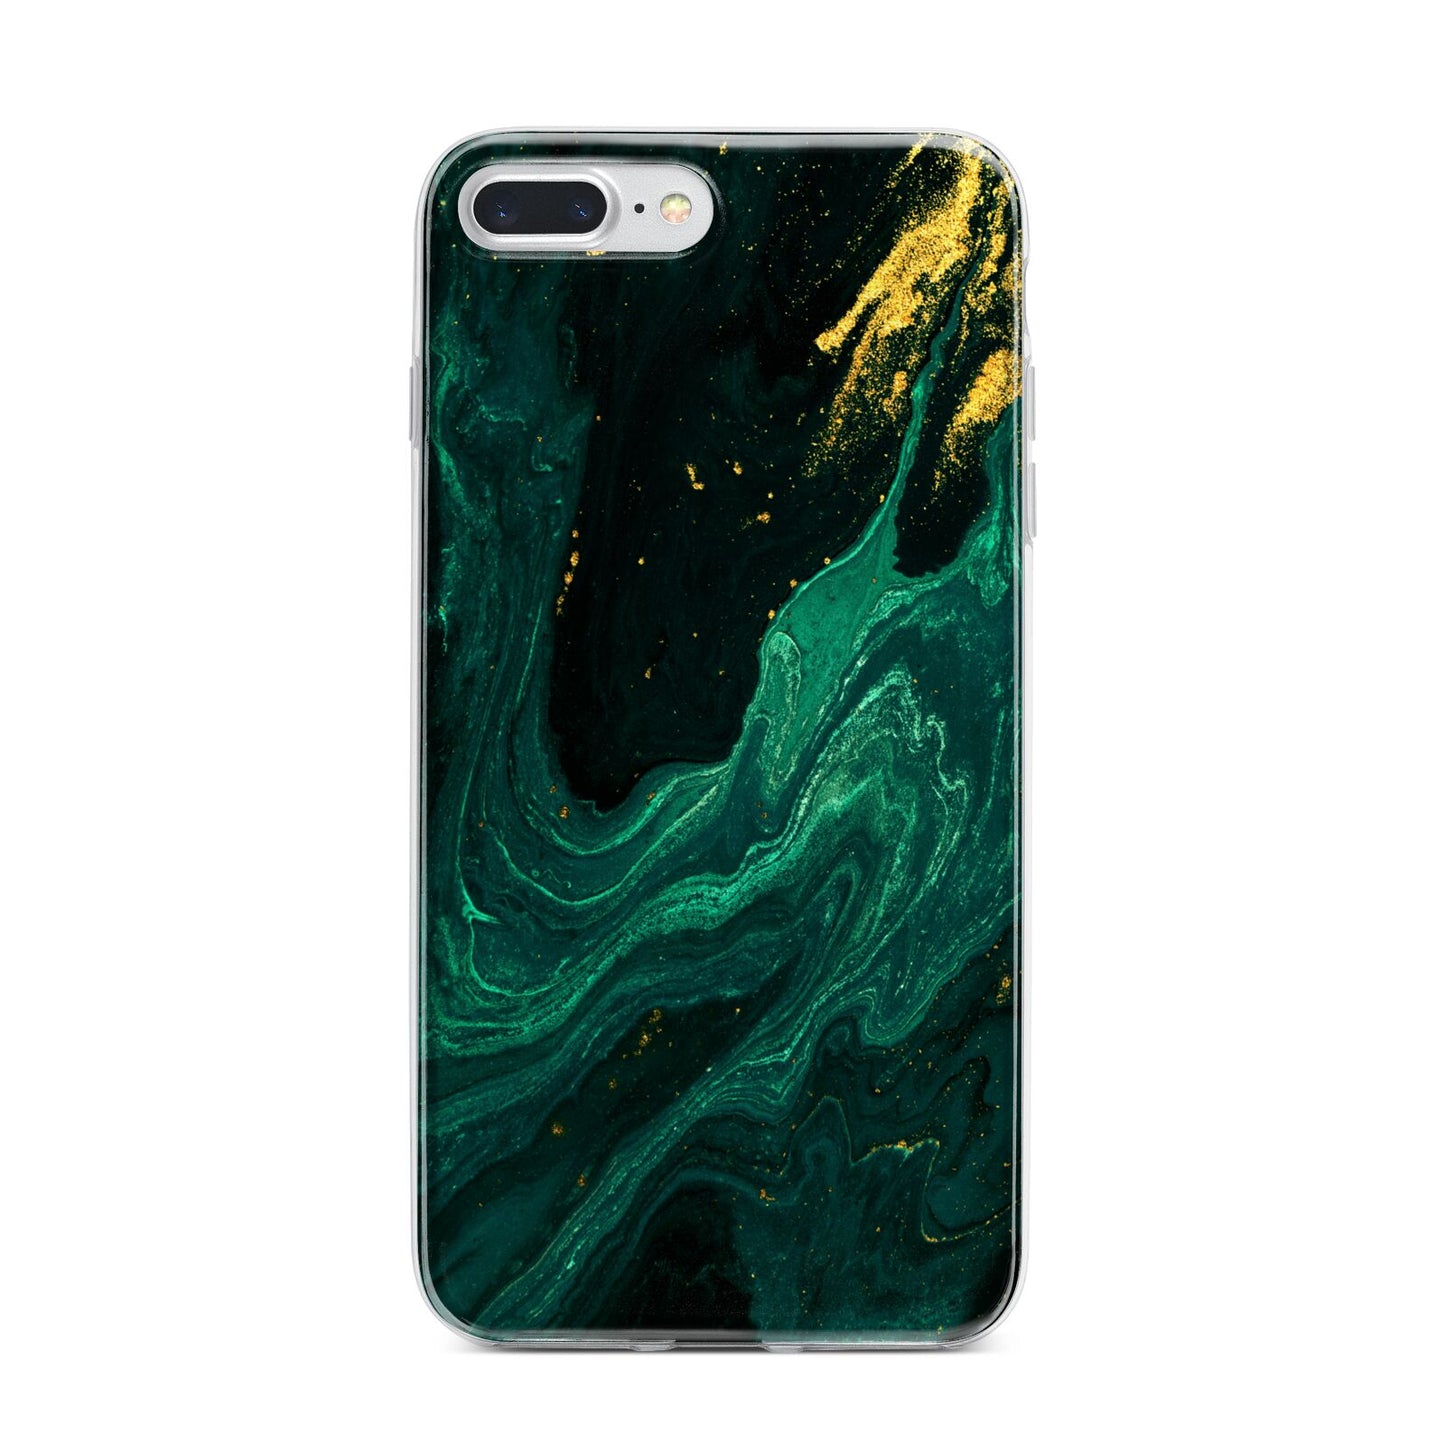 Emerald Green iPhone 7 Plus Bumper Case on Silver iPhone